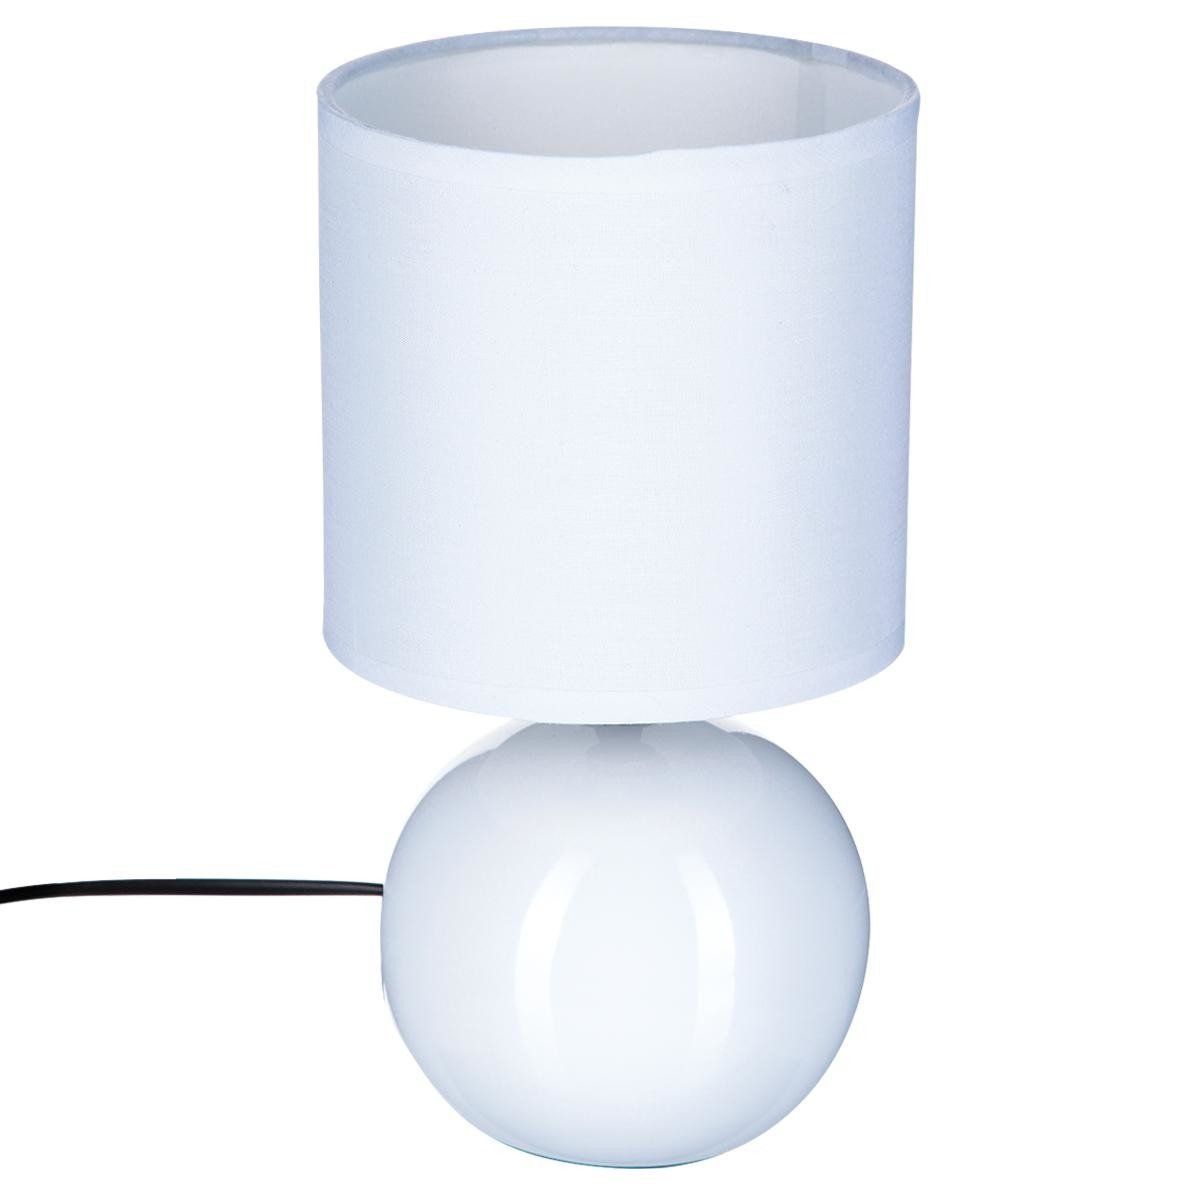 Atmosphera Keramická stolní lampa CHEVET BLANC, 25 cm, barva bílá - EDAXO.CZ s.r.o.